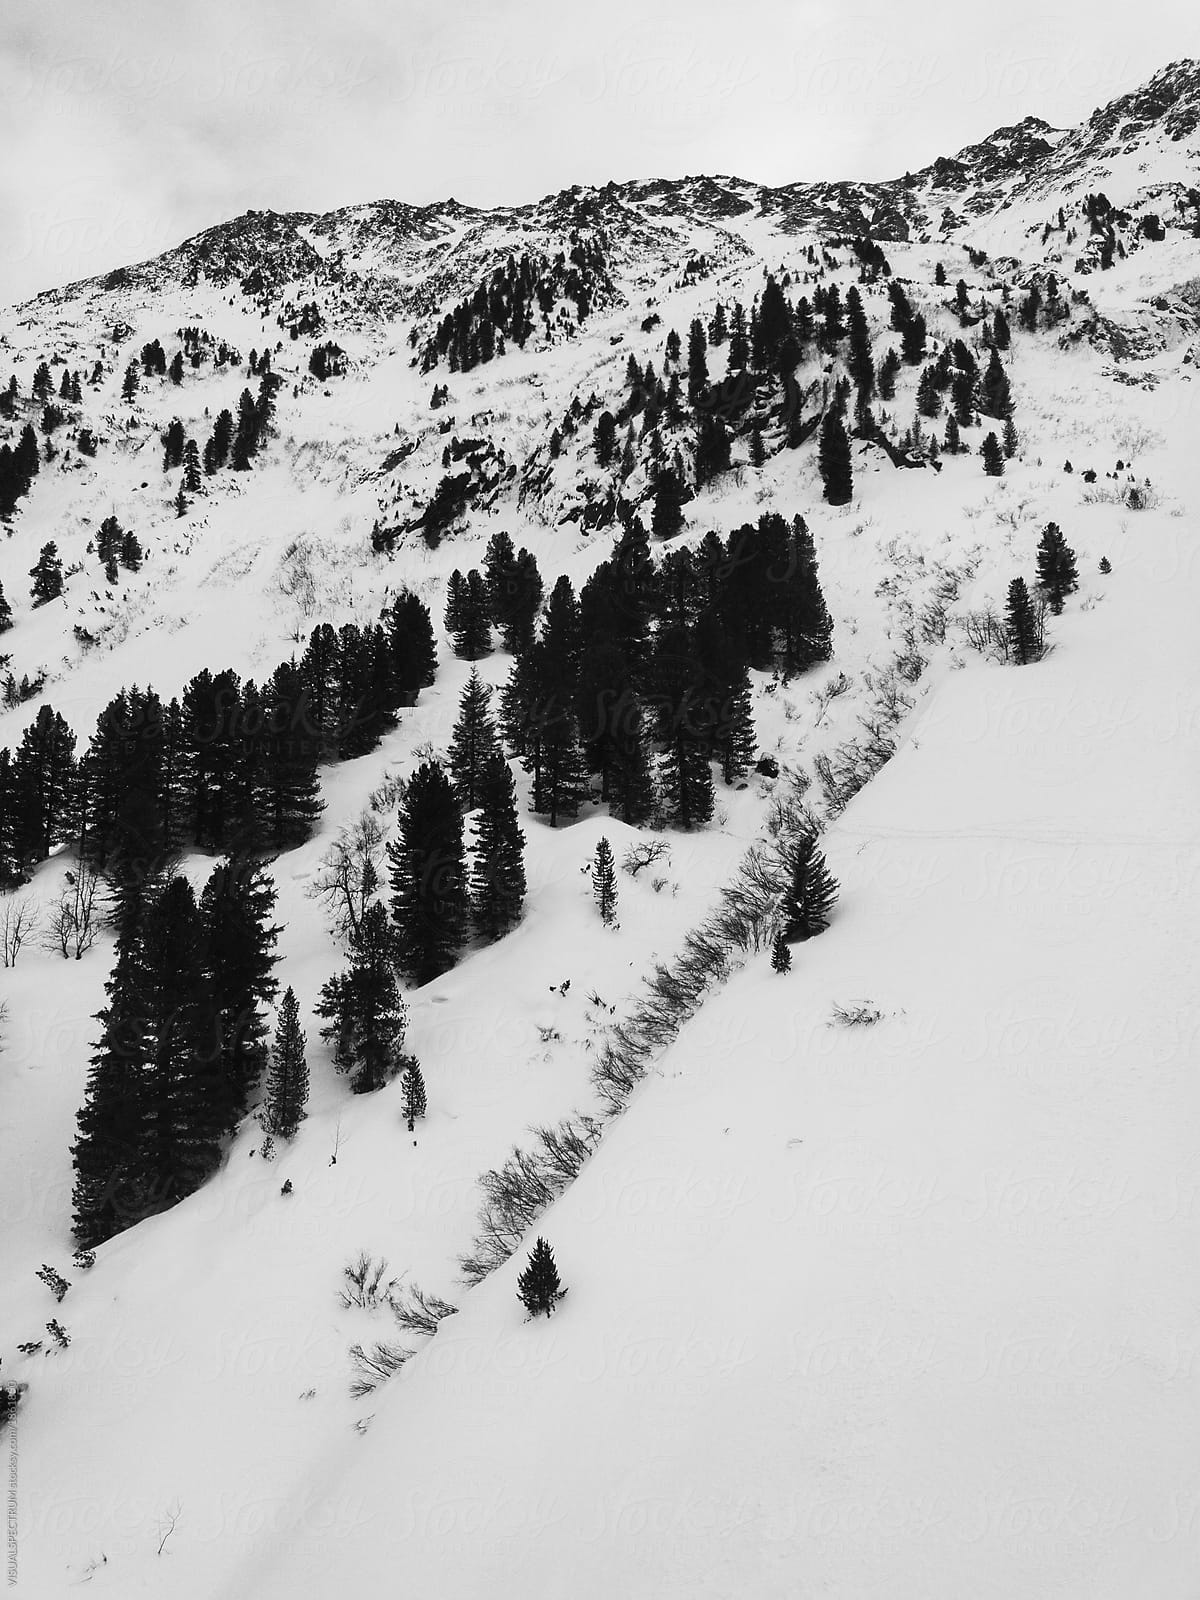 Black and White Shot of Alpine Winter Landscape